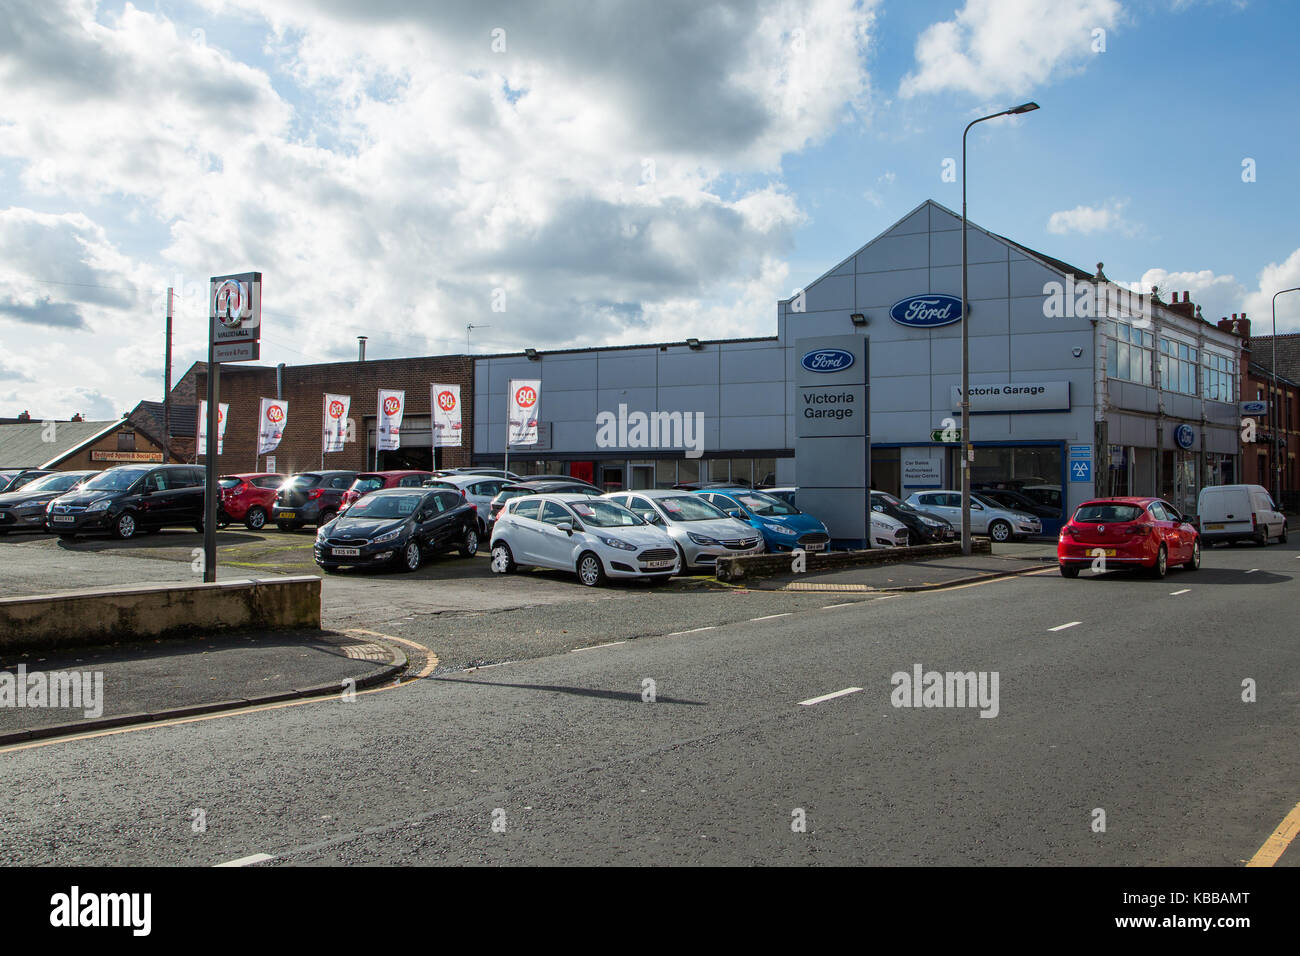 Victoria Garage Car Sales & Service In Leigh, England, UK Stock Photo